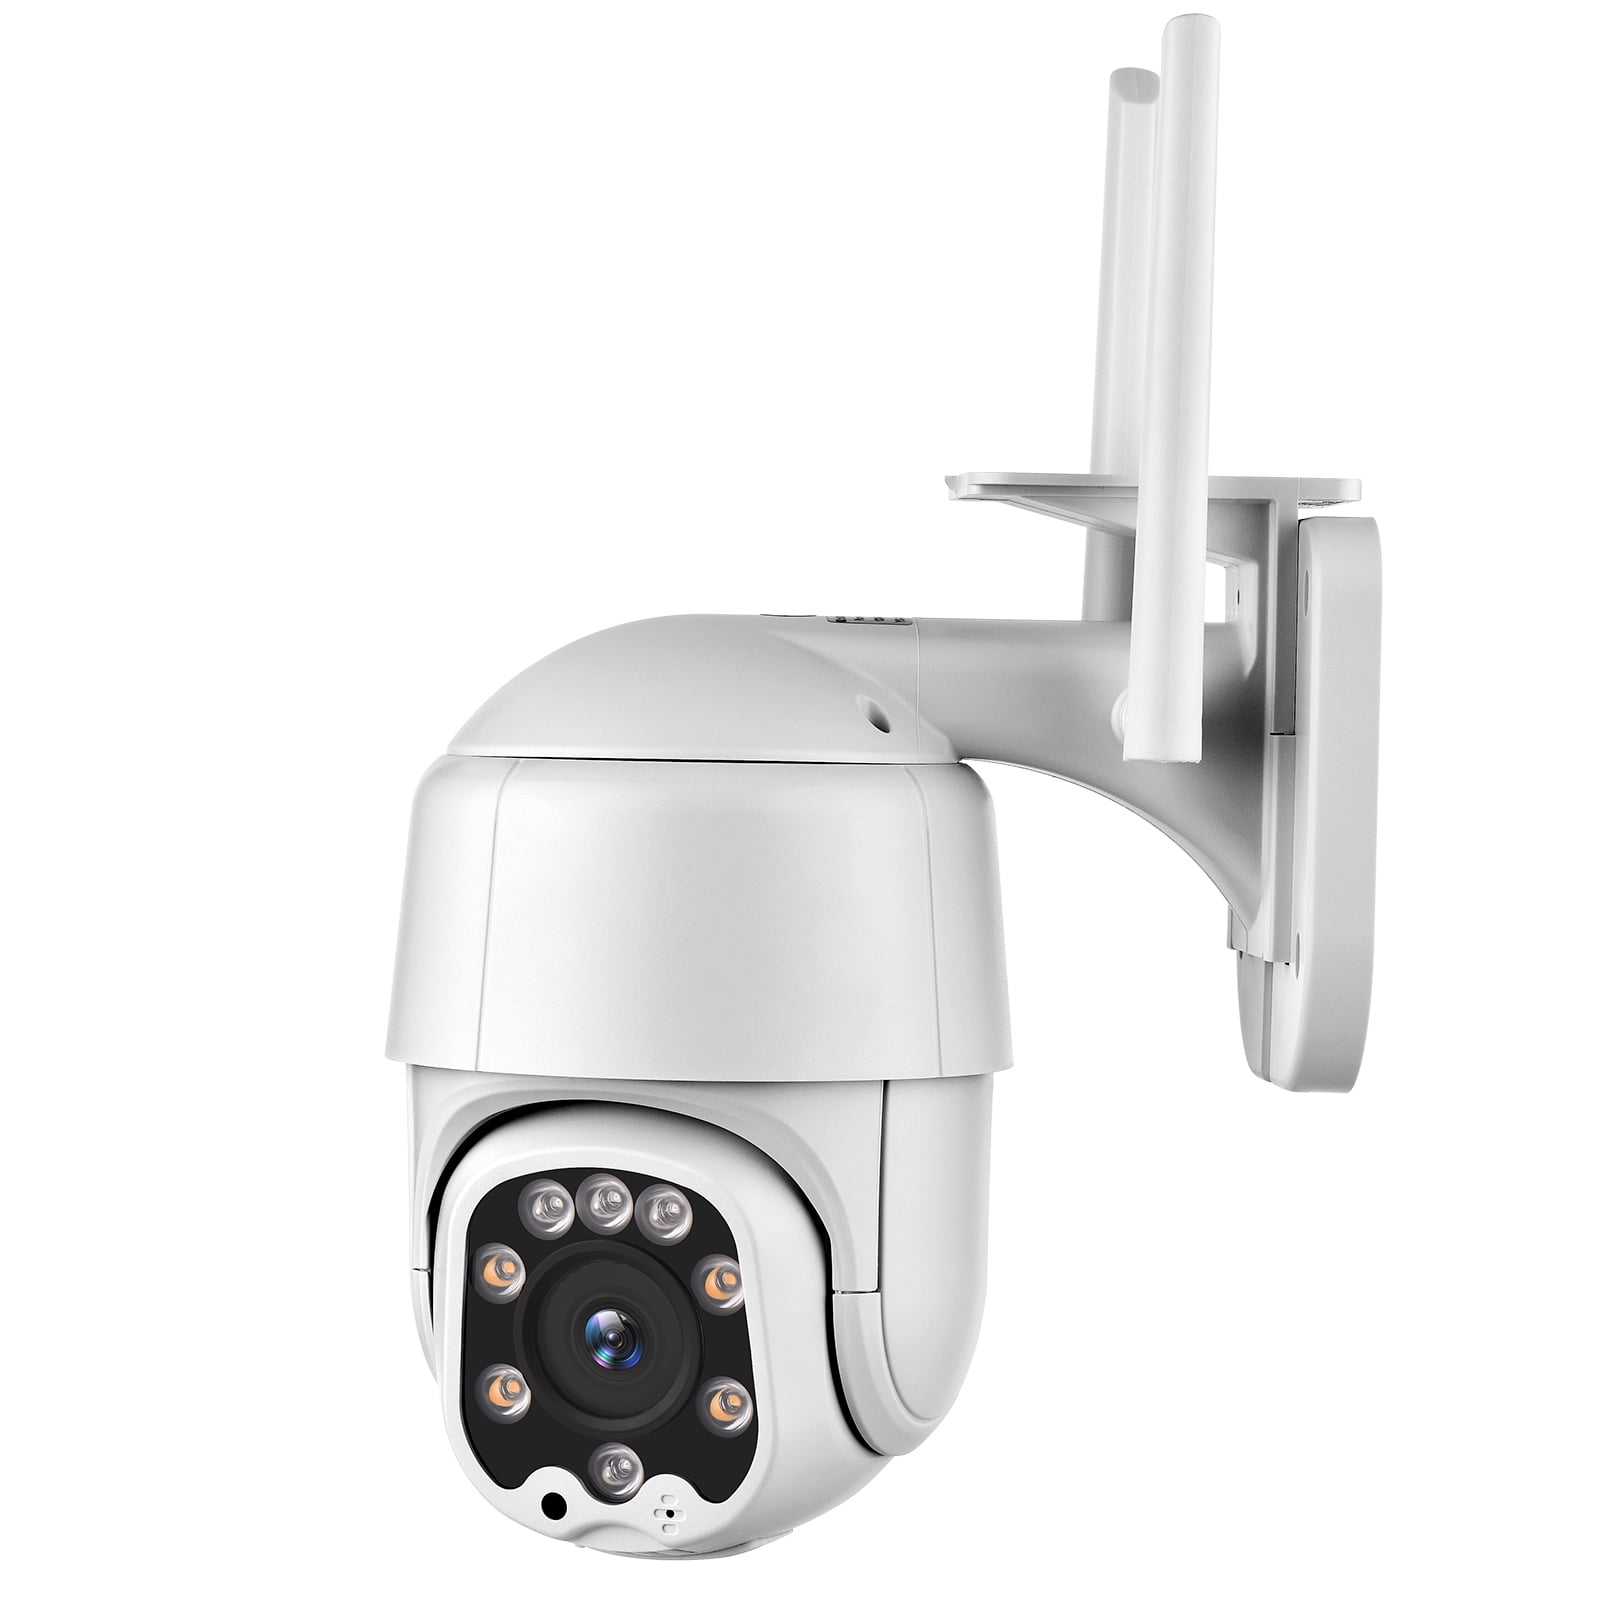 1080P Full HD Wi-Fi IP Camera Pan Tilt Wireless Outdoor CCTV Home Security Audio 